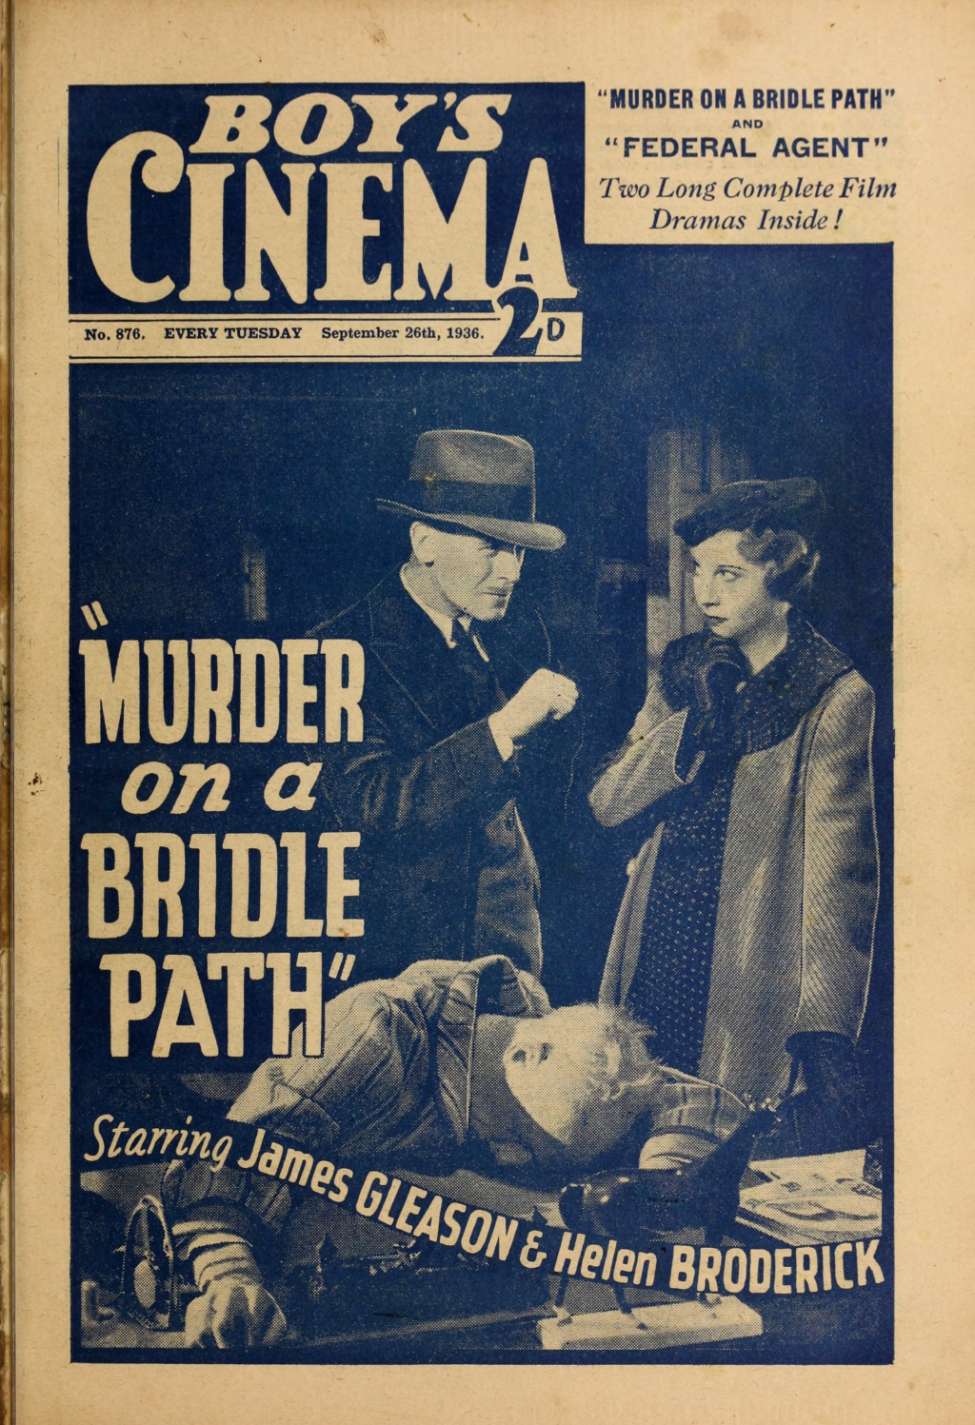 Comic Book Cover For Boy's Cinema 876 - Murder on a Bridle Path - James Gleason